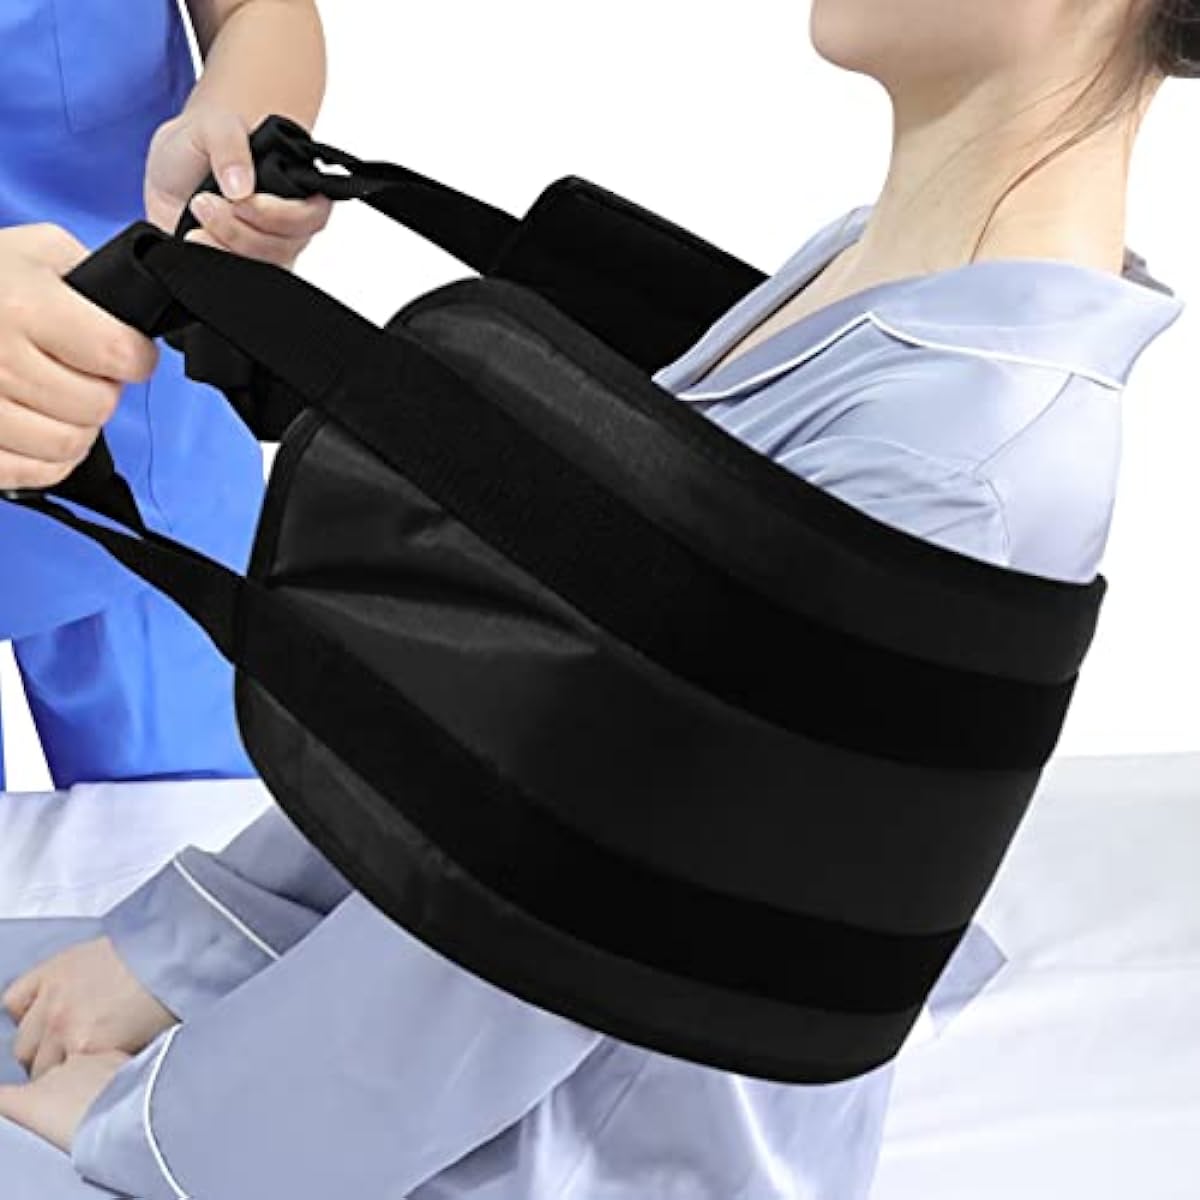 YHK Padded Bed Transfer Nursing Sling for Patient，Transfer Sling for Lifting Seniors（31.5 in），Nursing Transfer Sling Handle Back Lift Mobility Belt for Patient Care， for Medical Lifting Assistance